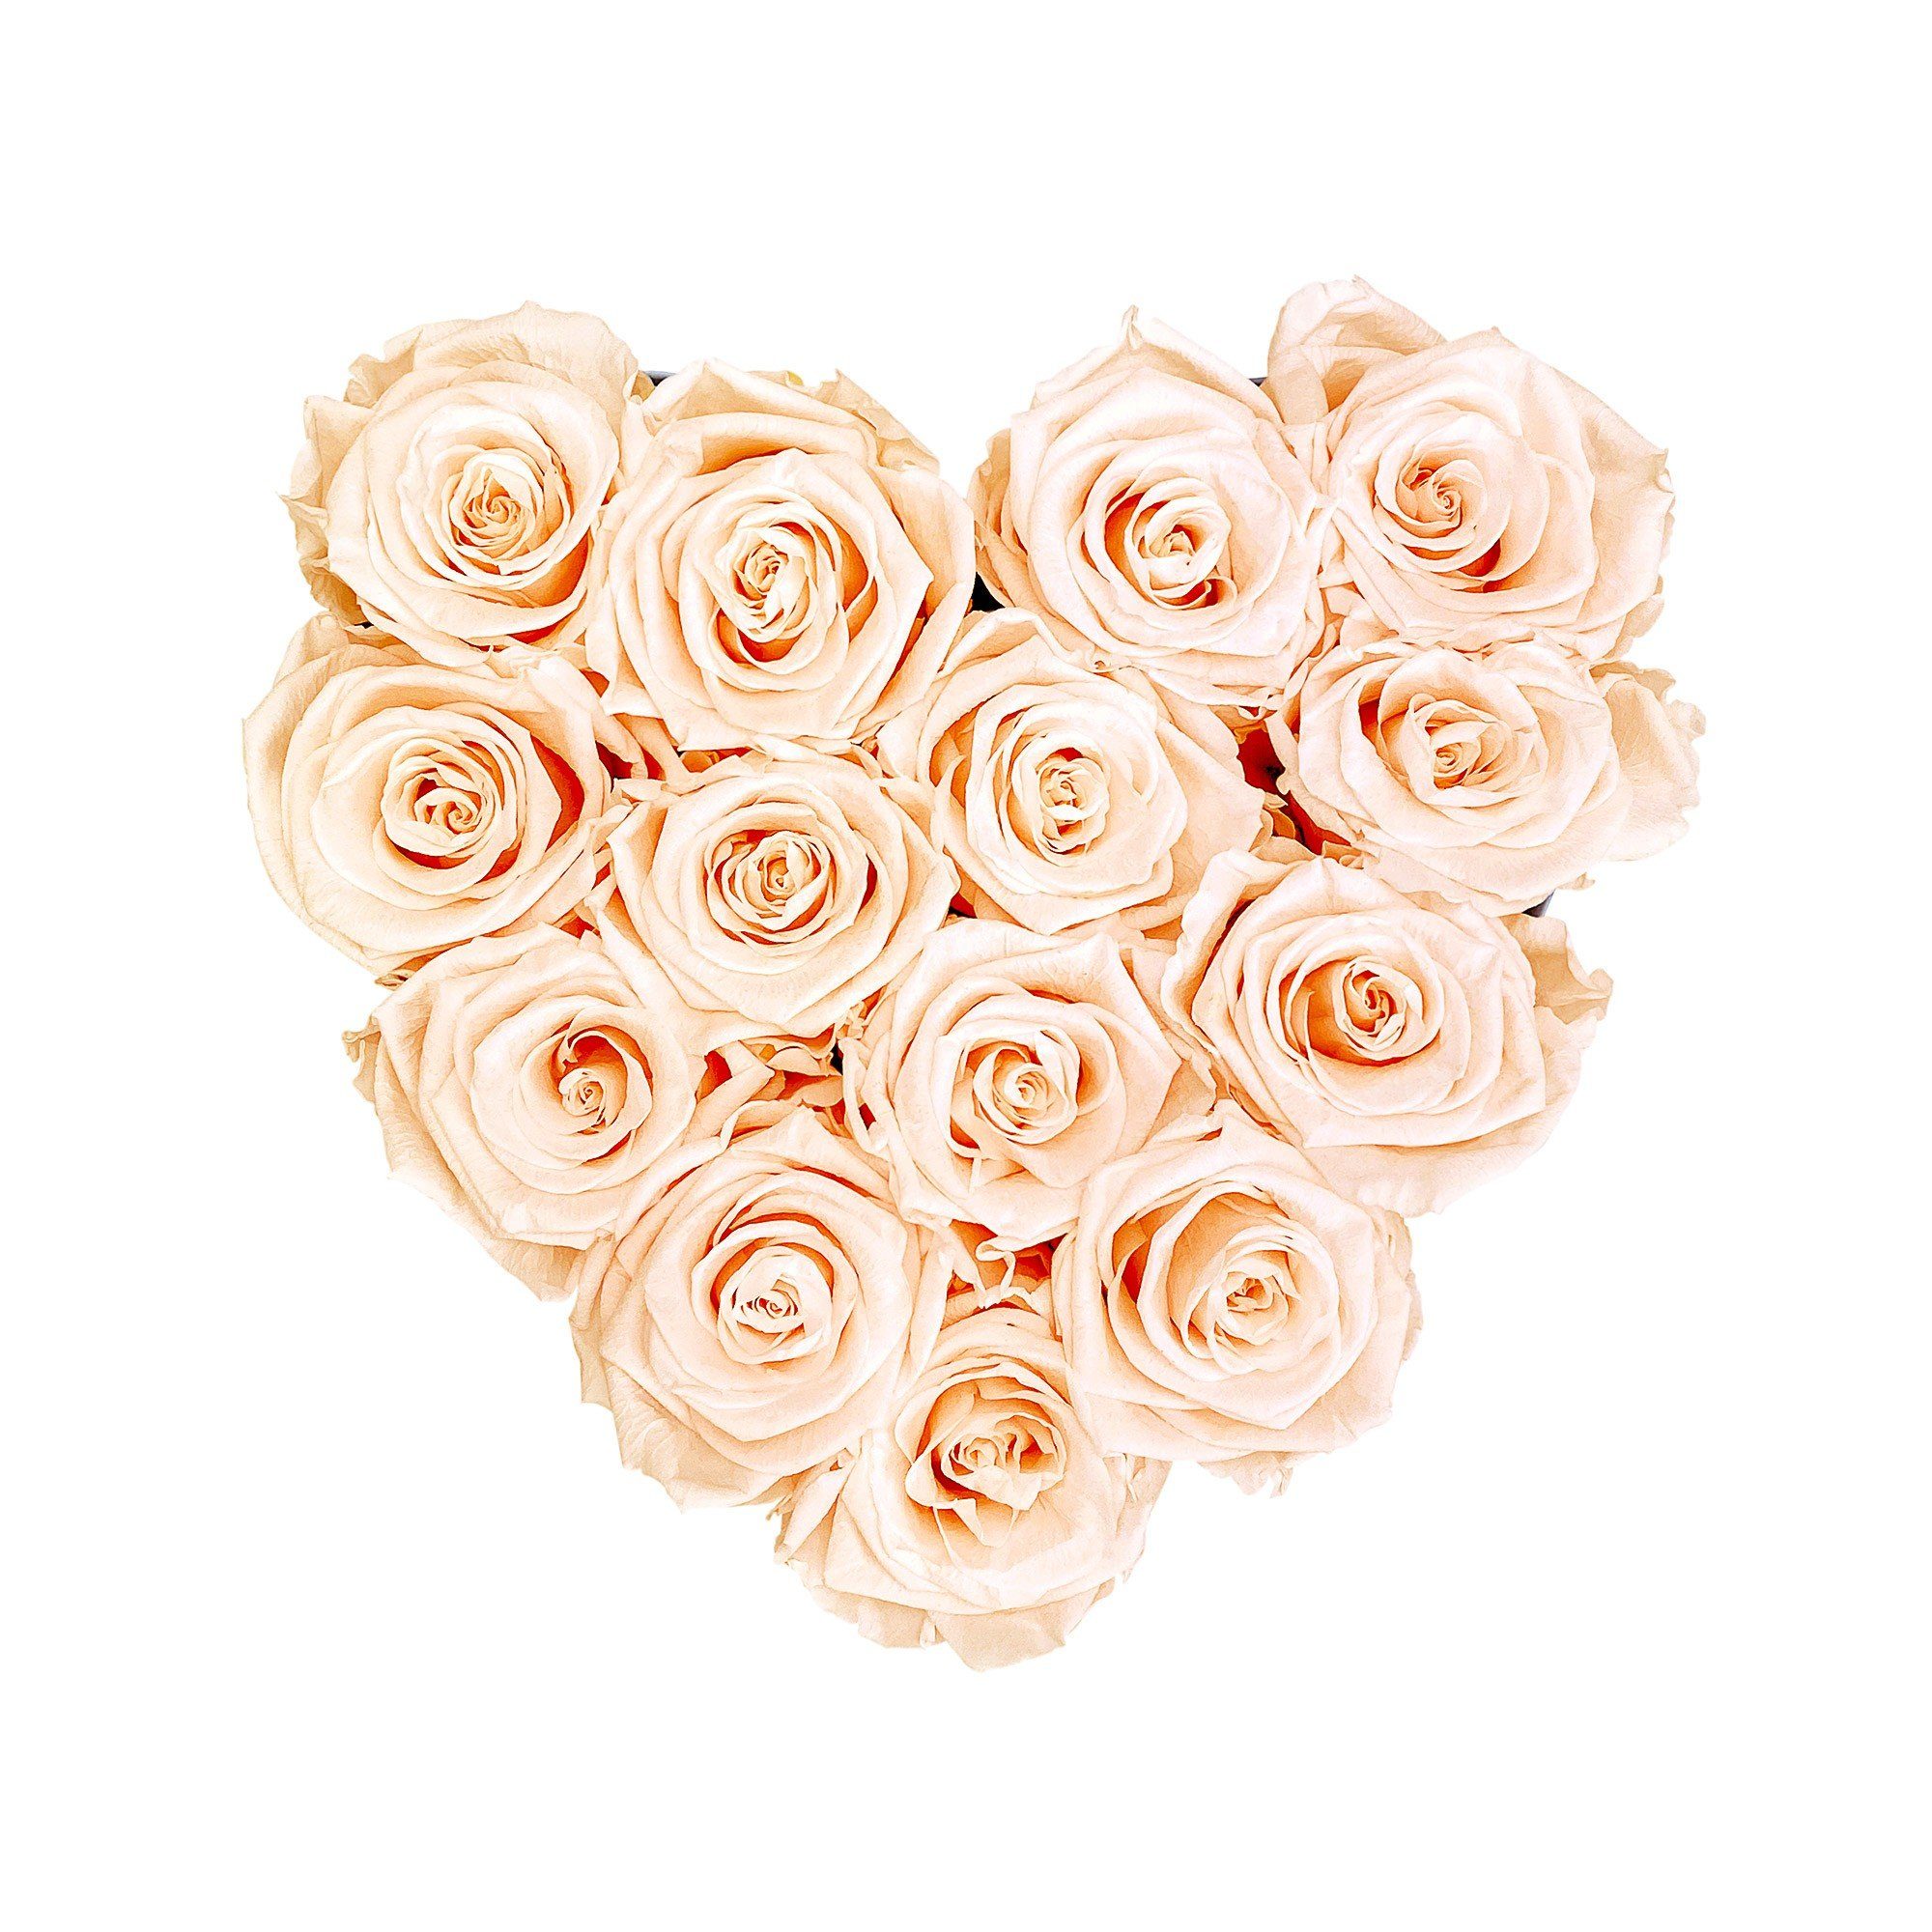 Flowers, Höhe I Richter Rose, by Herz Infinity Raul Echte, I konservierte Kunstblume Holy Rosen Peach Jahre 10 3 duftende haltbar cm I Großes Blumen Infinity mit Rosenbox